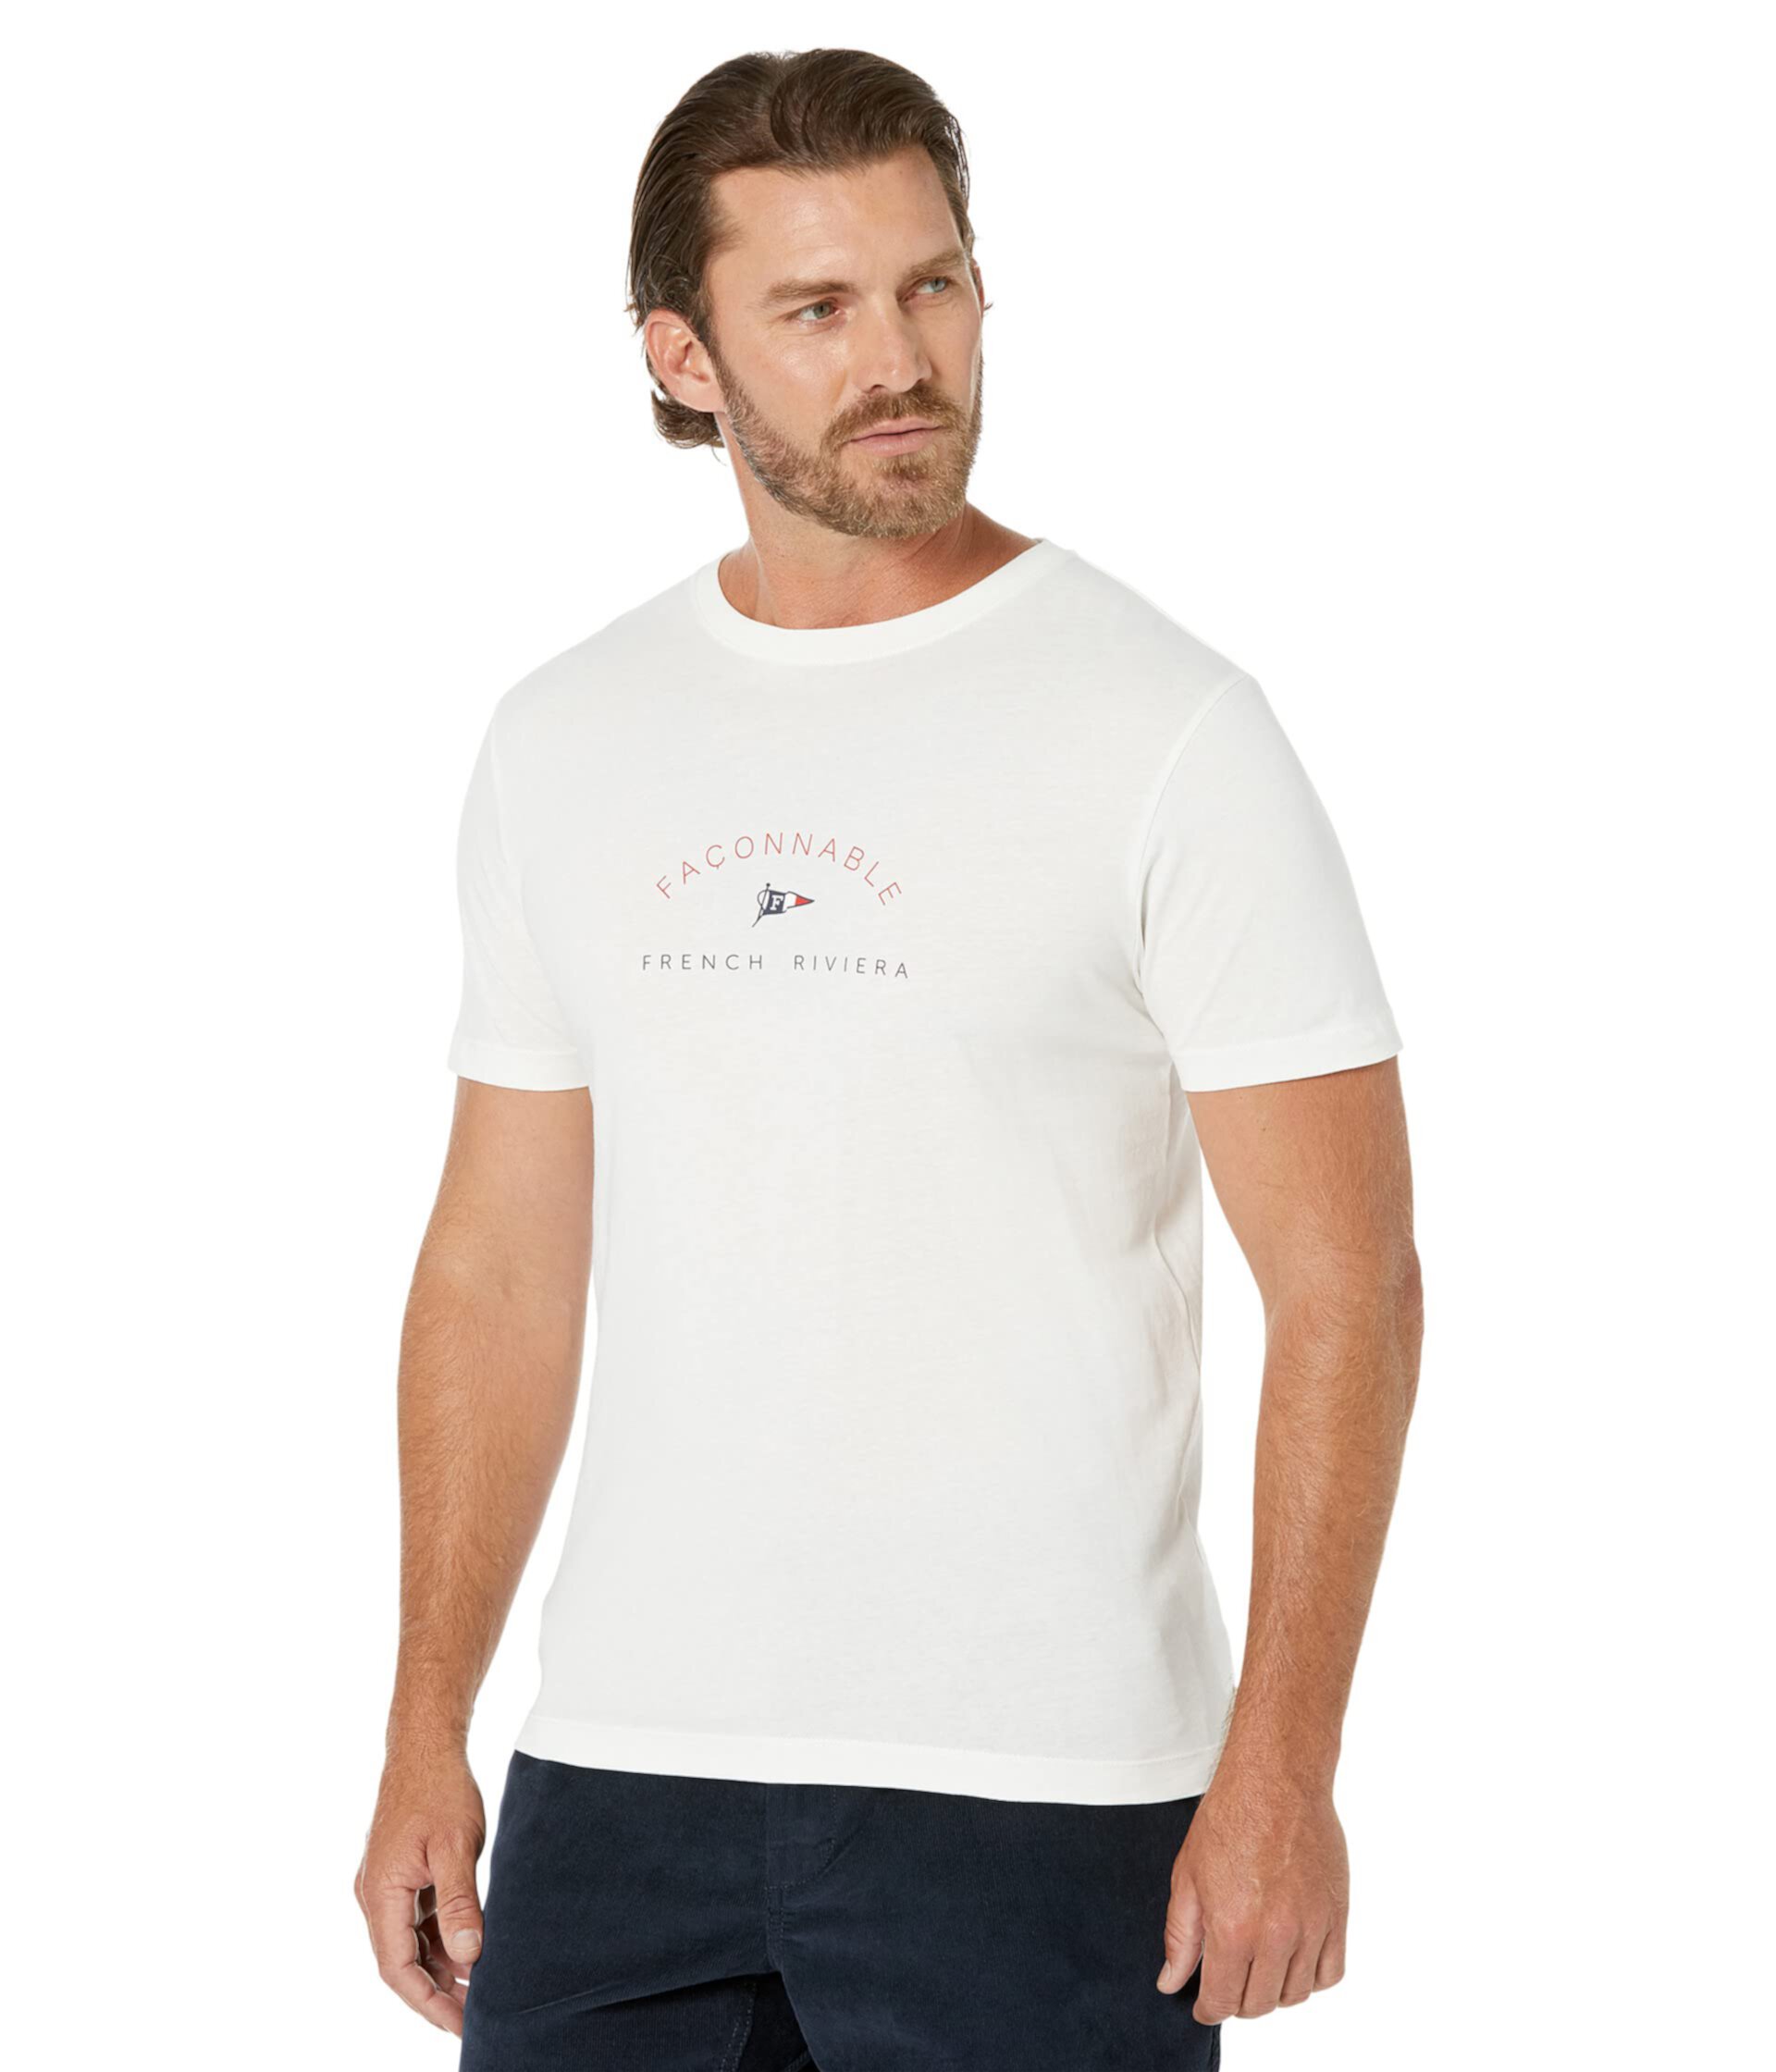 Tamarin FFR Short Sleeve T-Shirt Faconnable